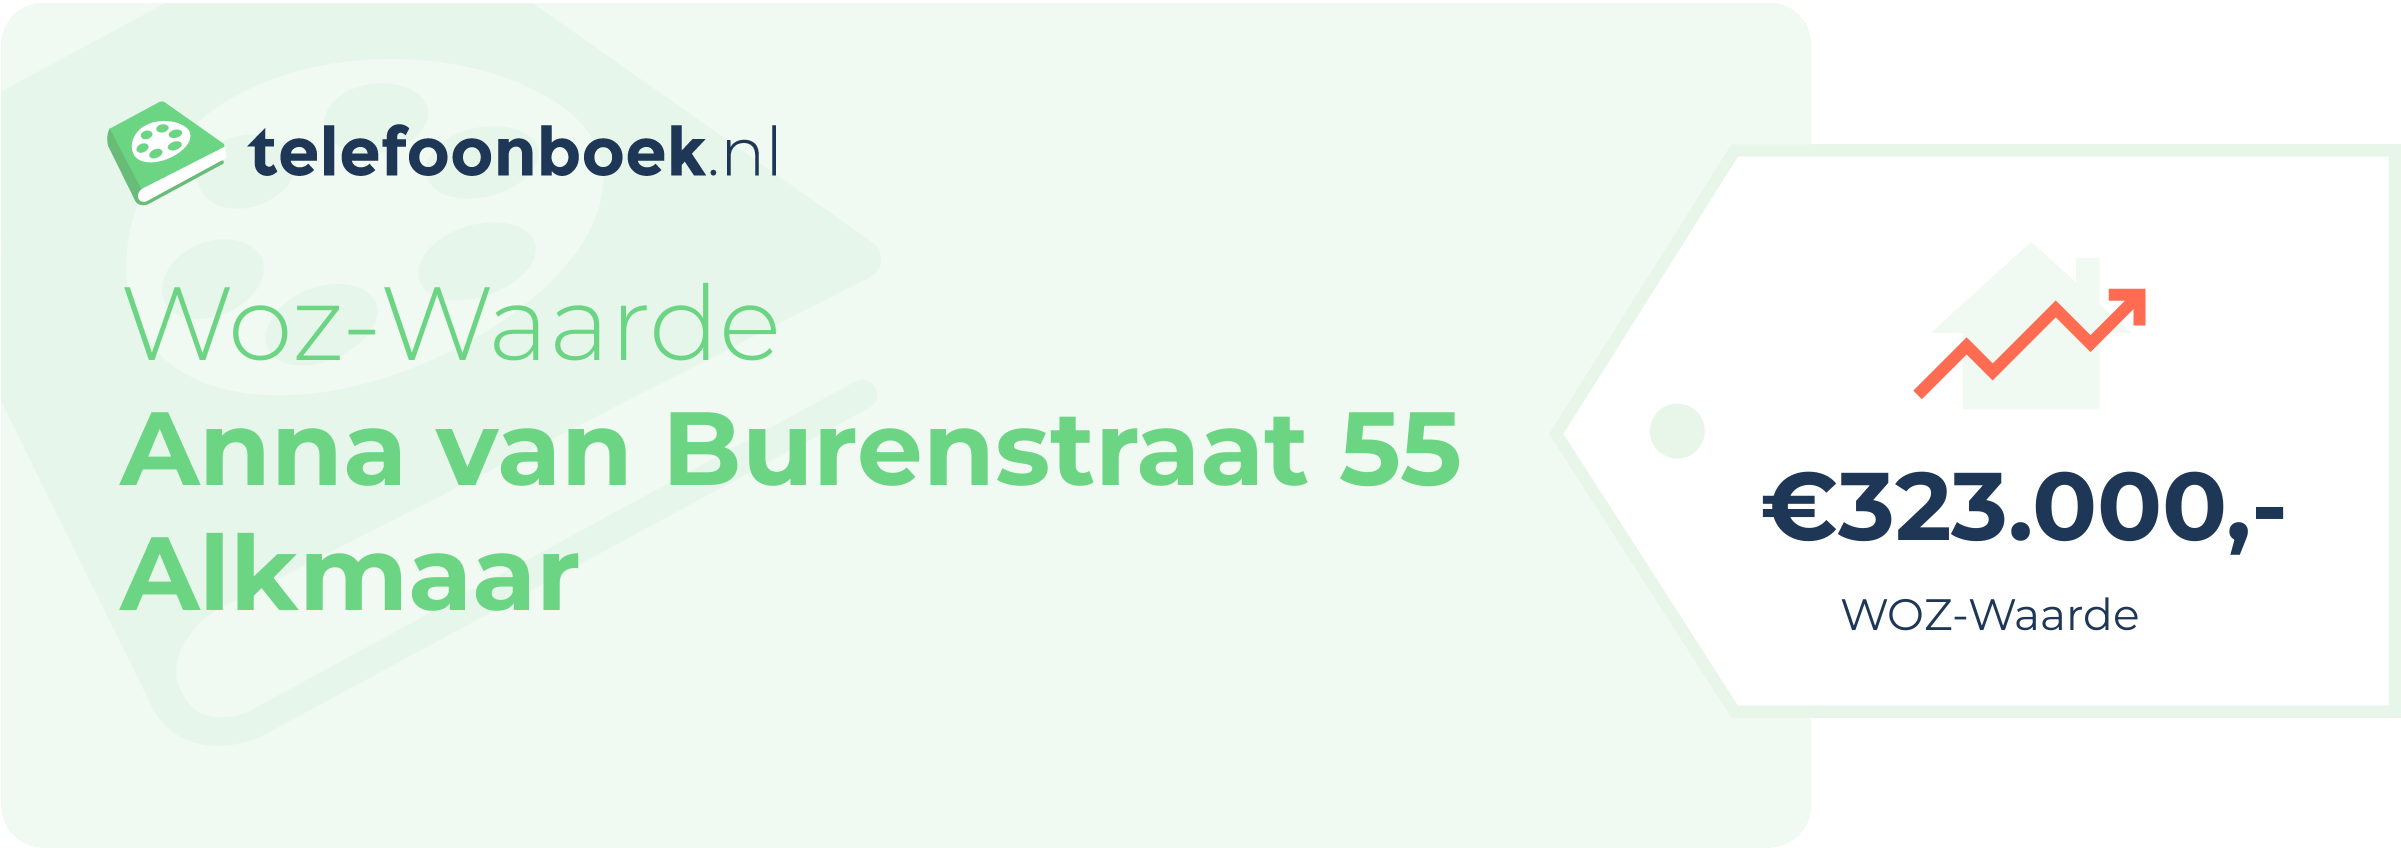 WOZ-waarde Anna Van Burenstraat 55 Alkmaar